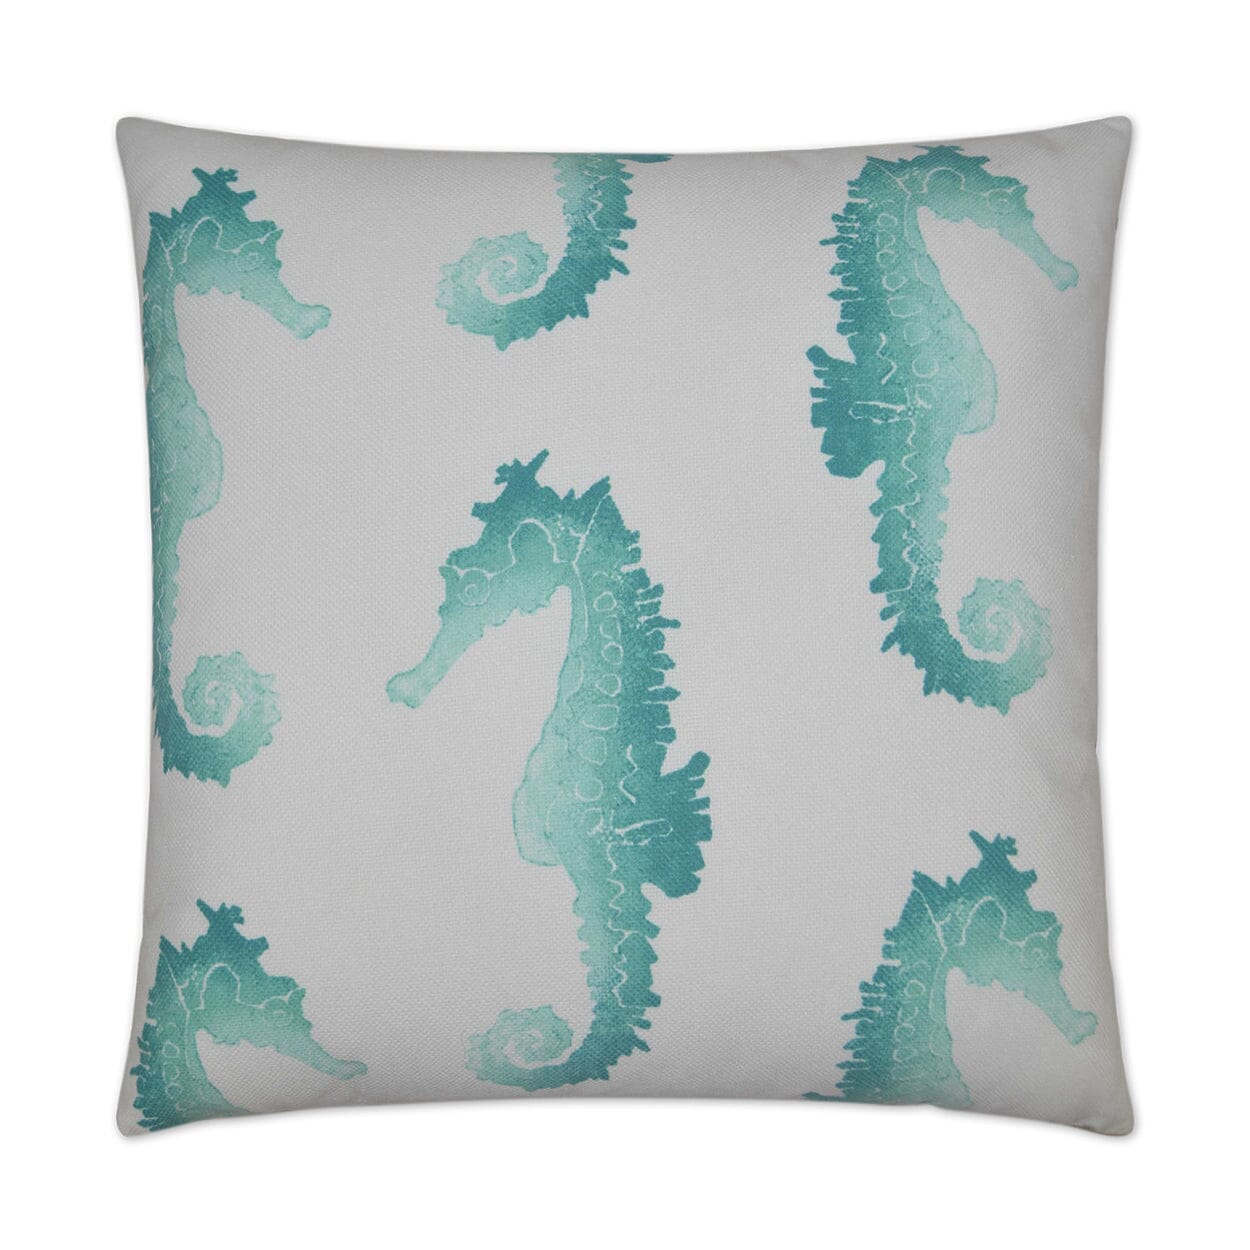 D.V. Kap 22" x 22" Outdoor Throw Pillow | Seahorse Turquoise Pillows D.V Kap Outdoor